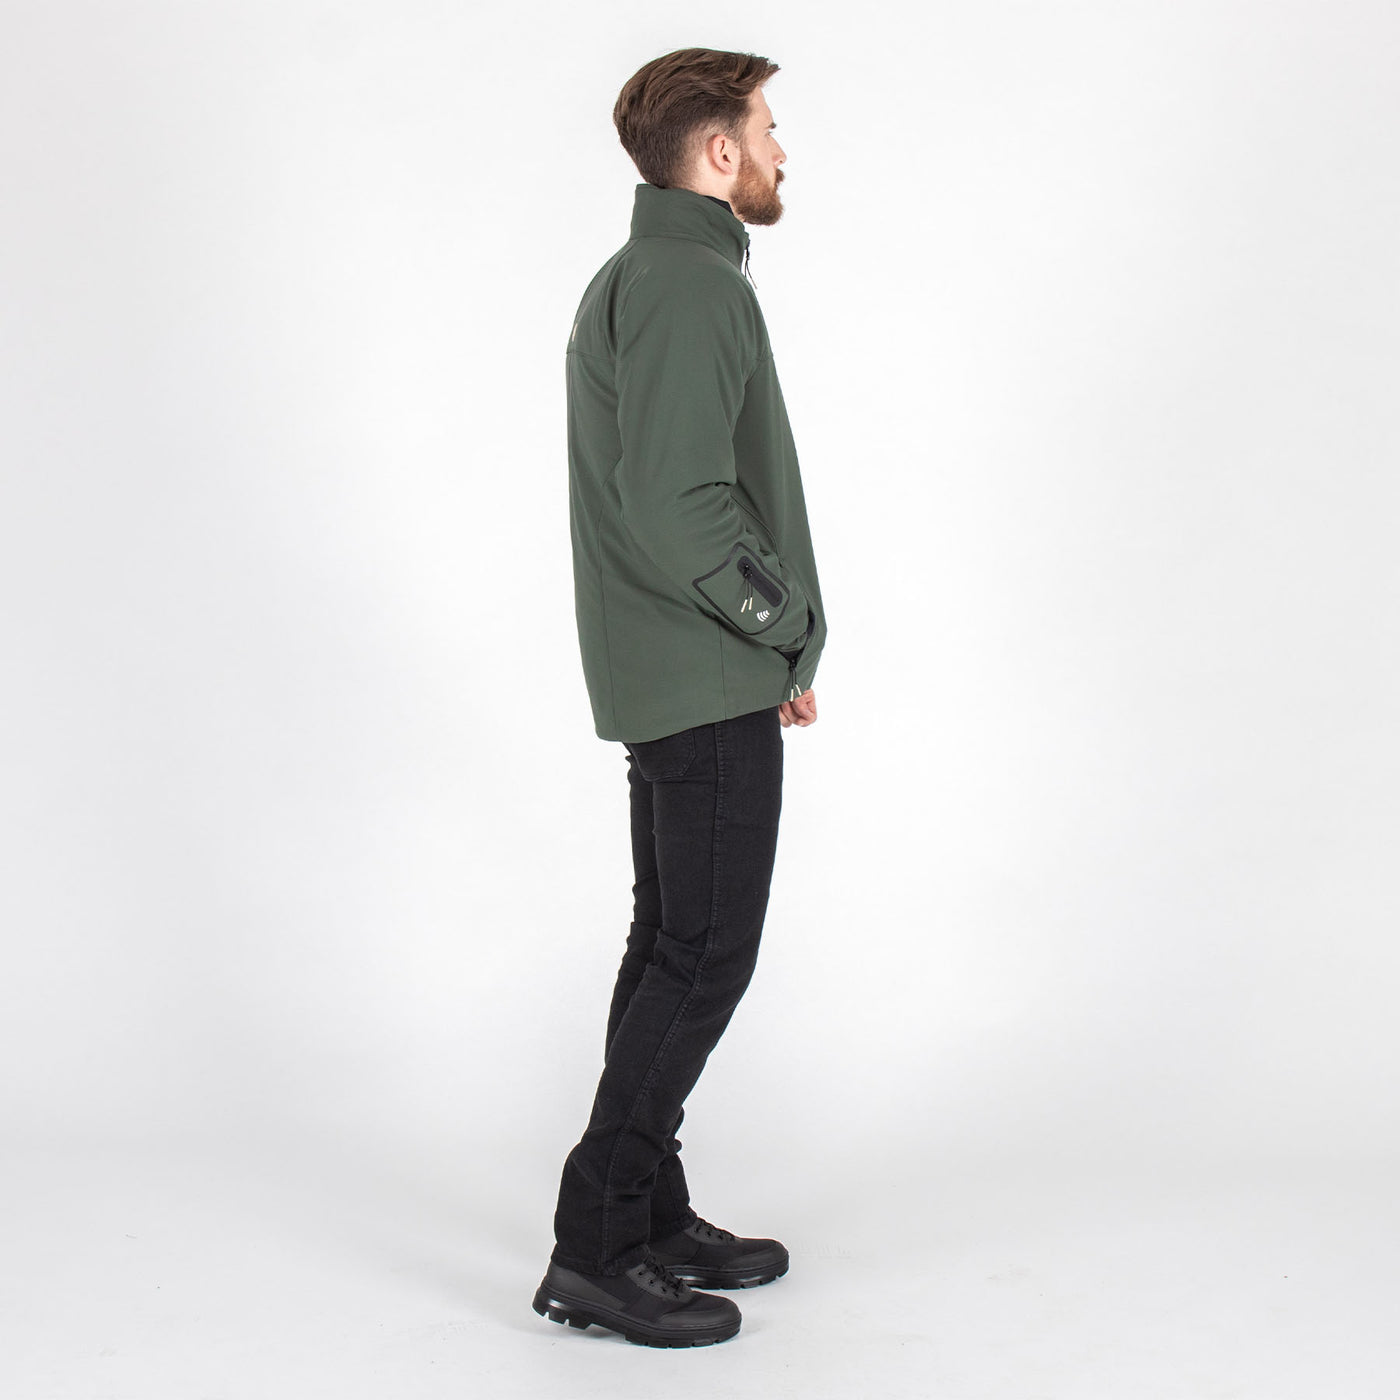 Knox Softshell Jacket Dual Pro Green